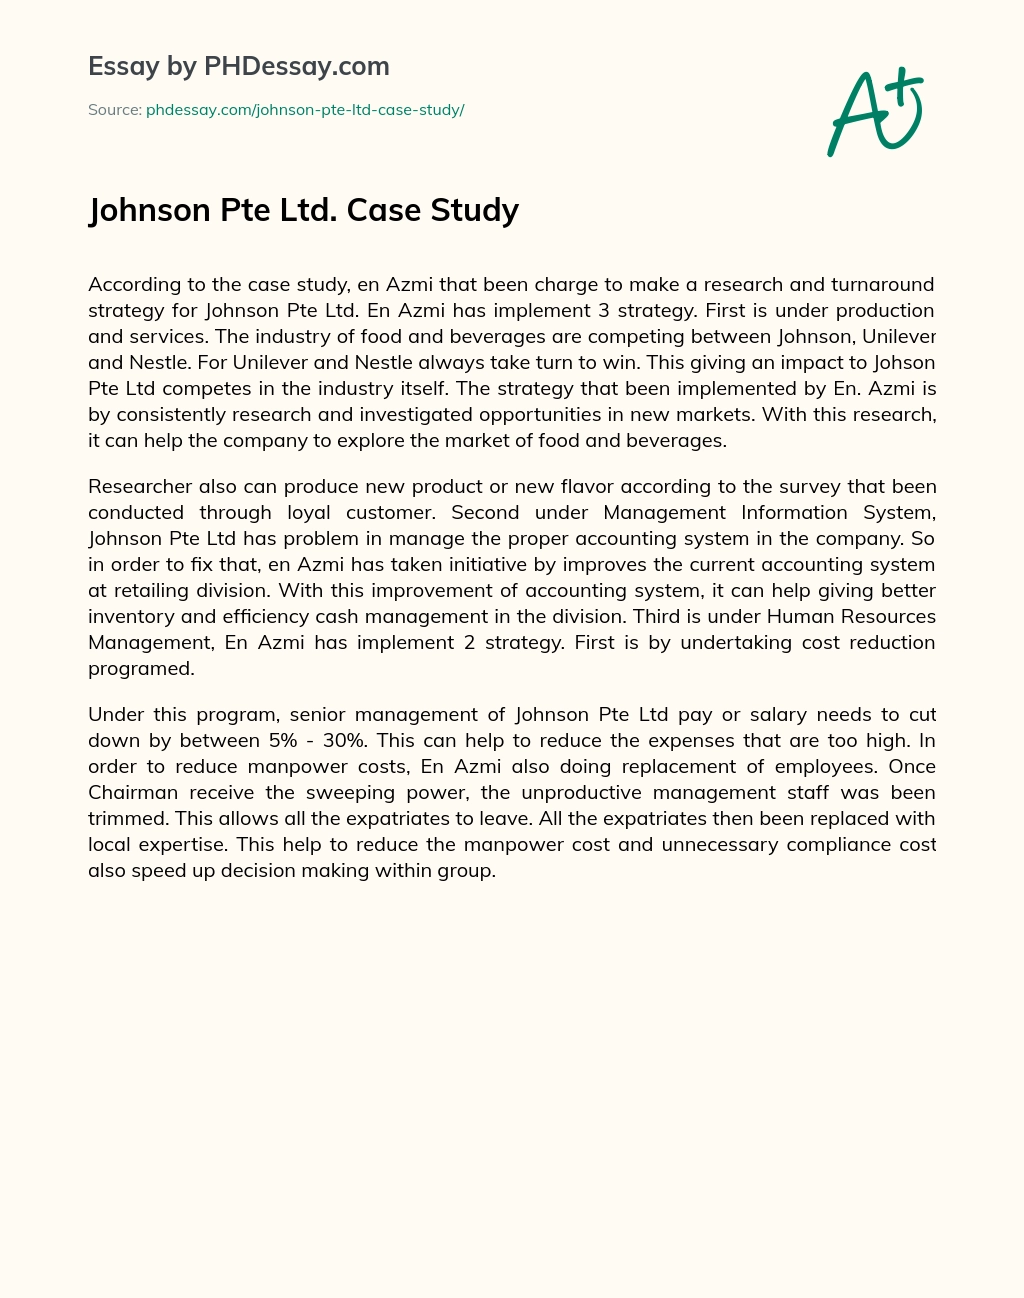 Johnson Pte Ltd. Case Study essay